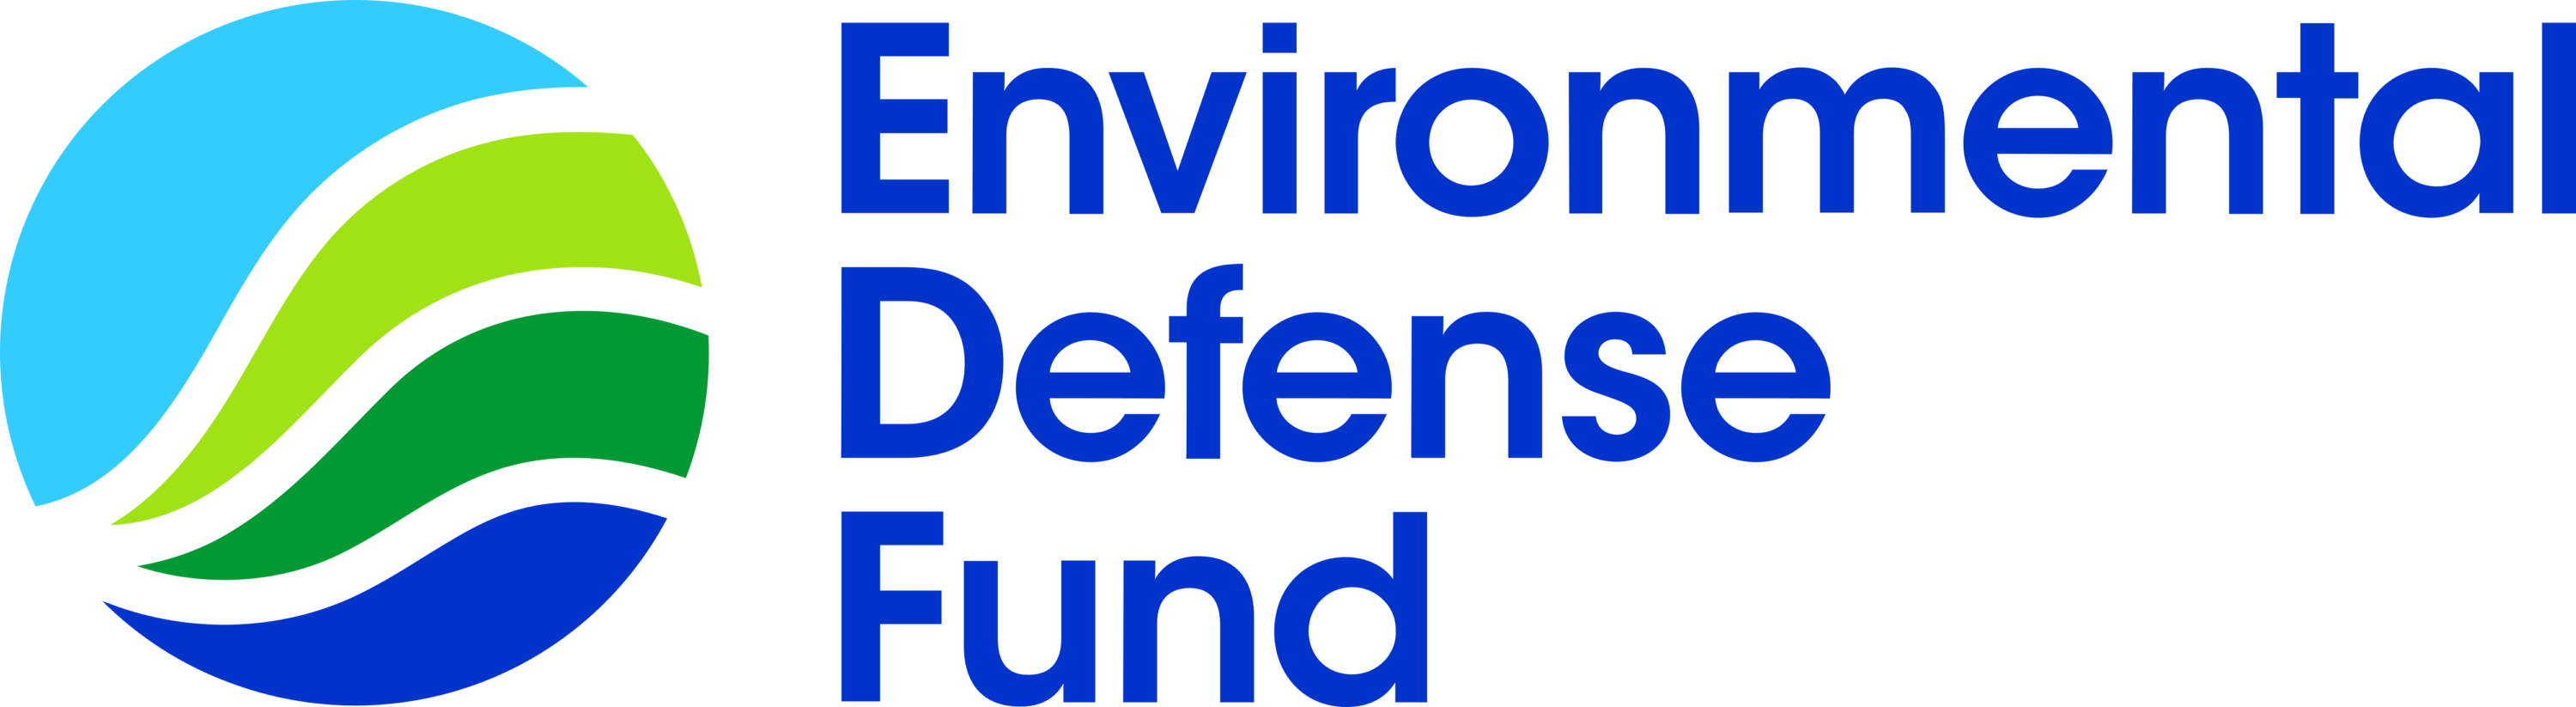 Environmental Defense Fund (EDF) Logo